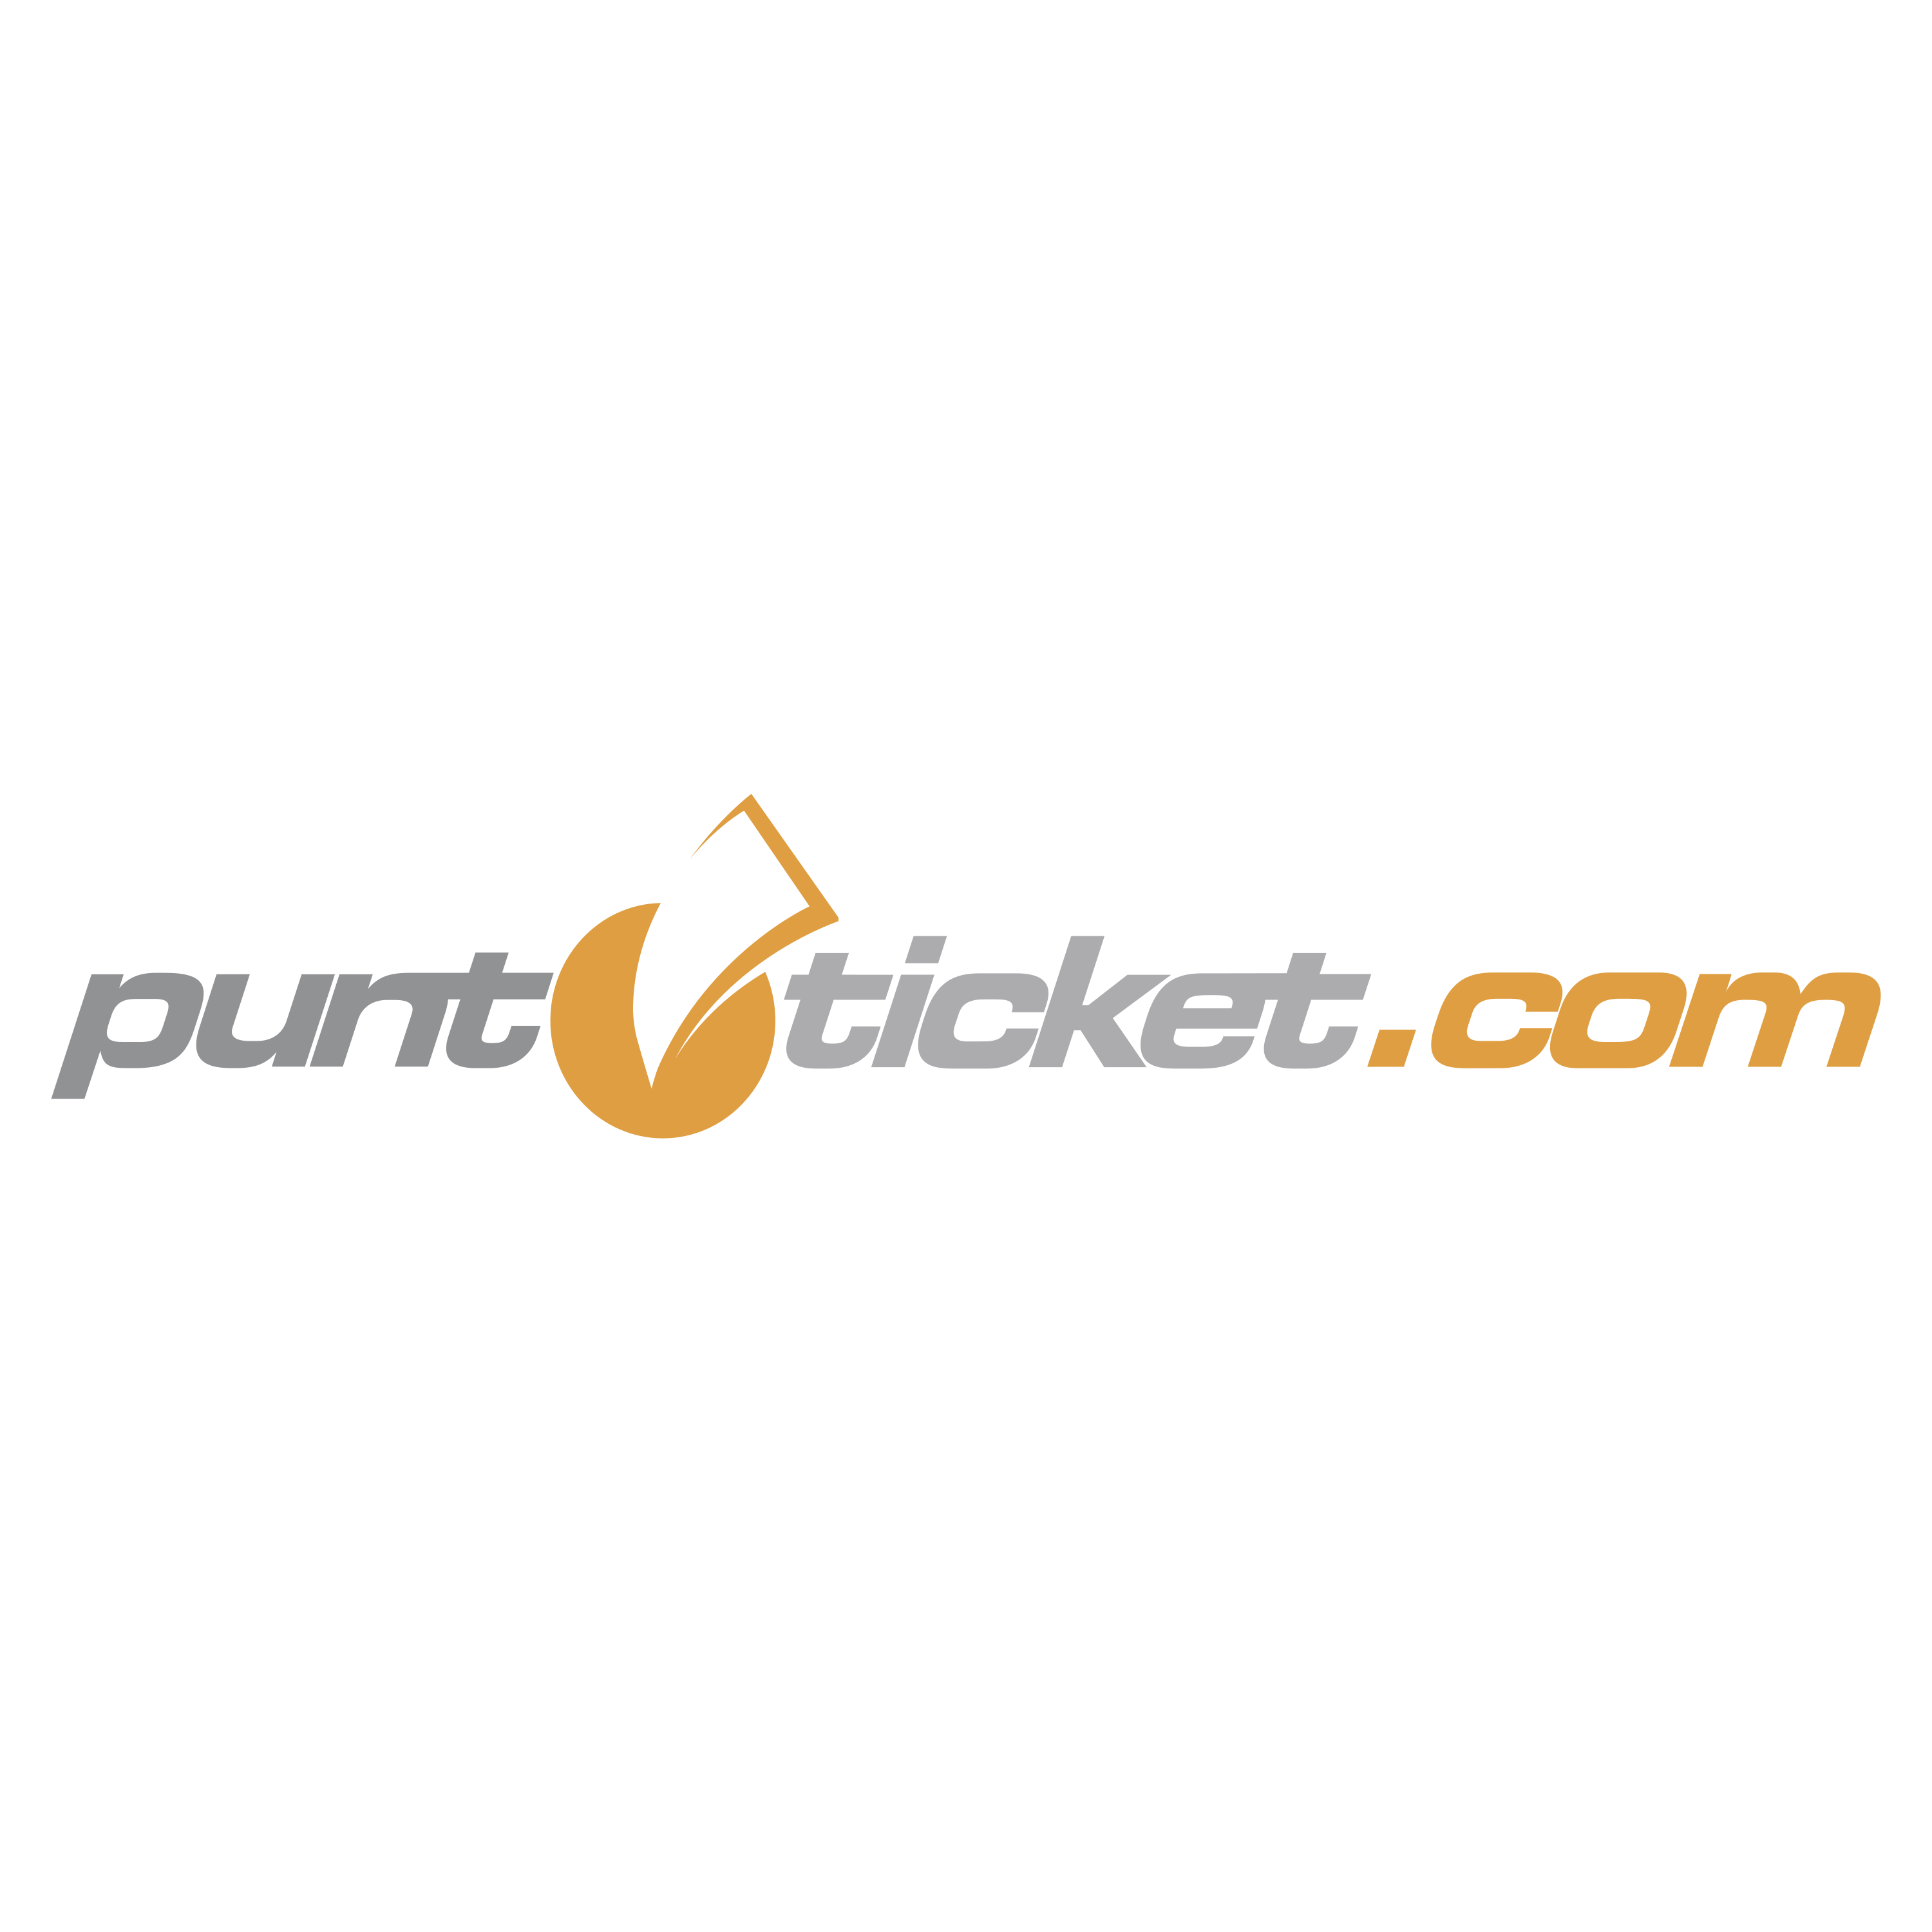 Puntoticket Logo  Transparent Image